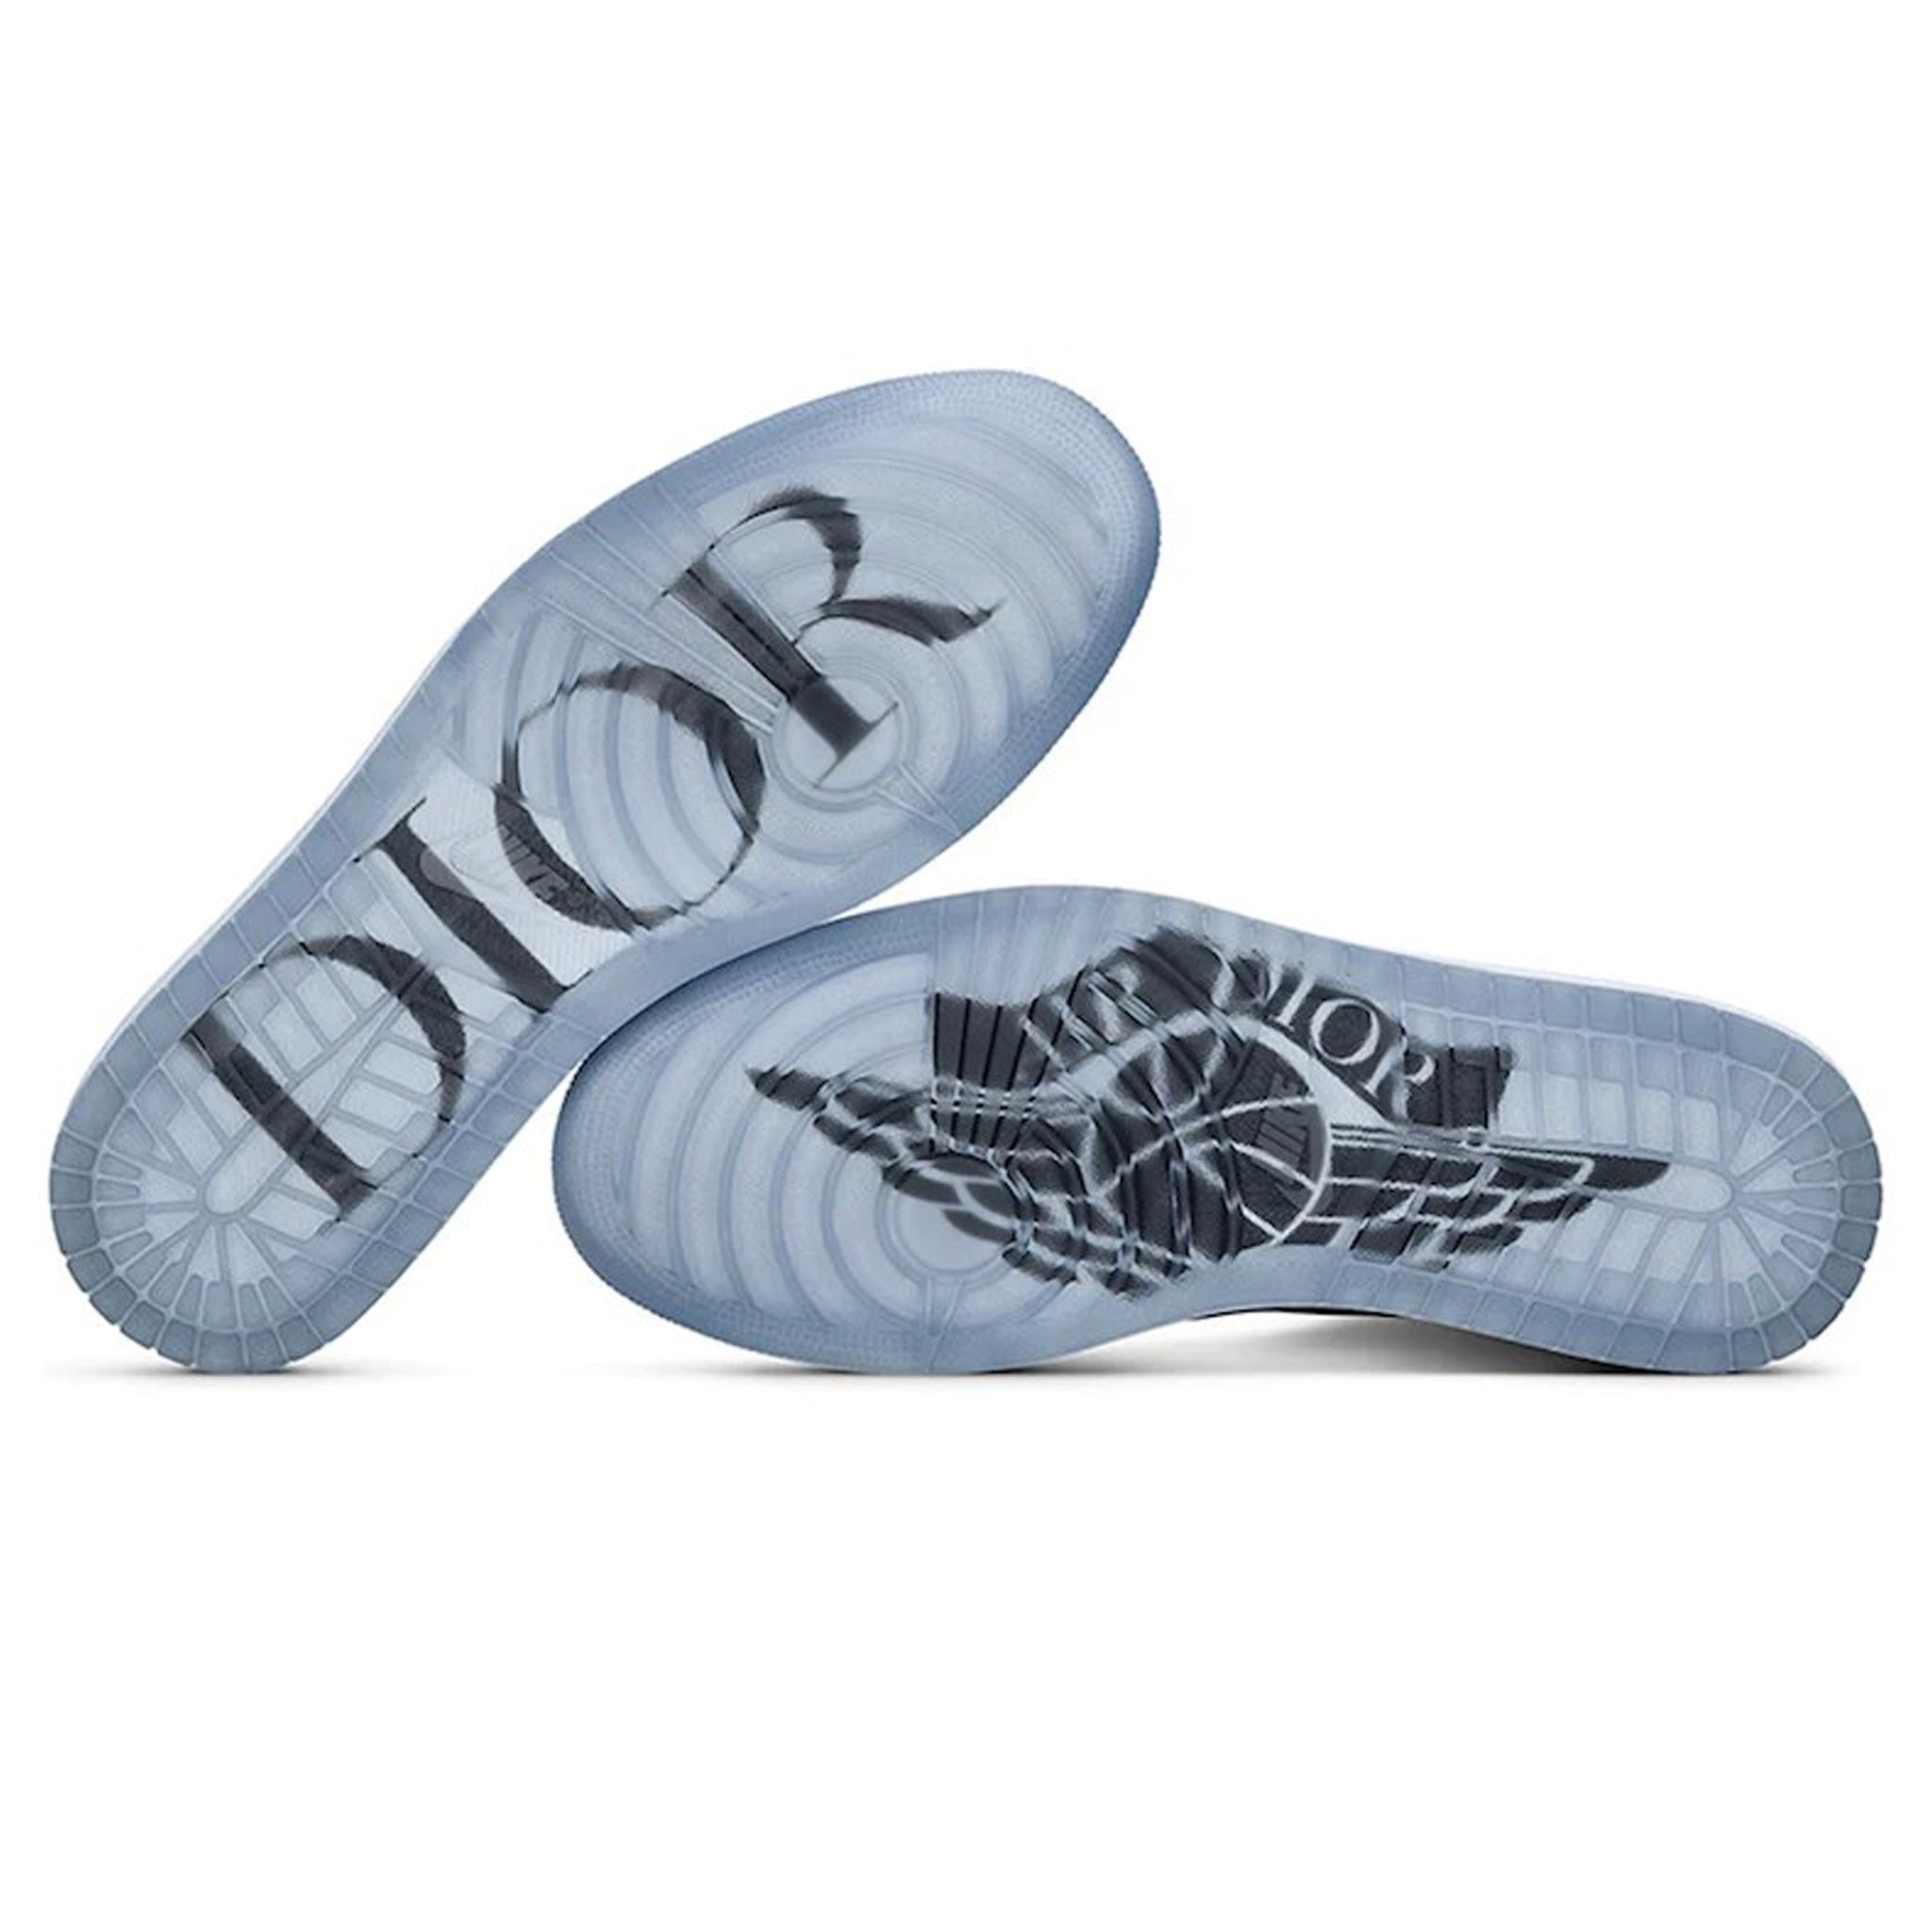 Dior x Air Jordan 1 High OG Grey Sneaker